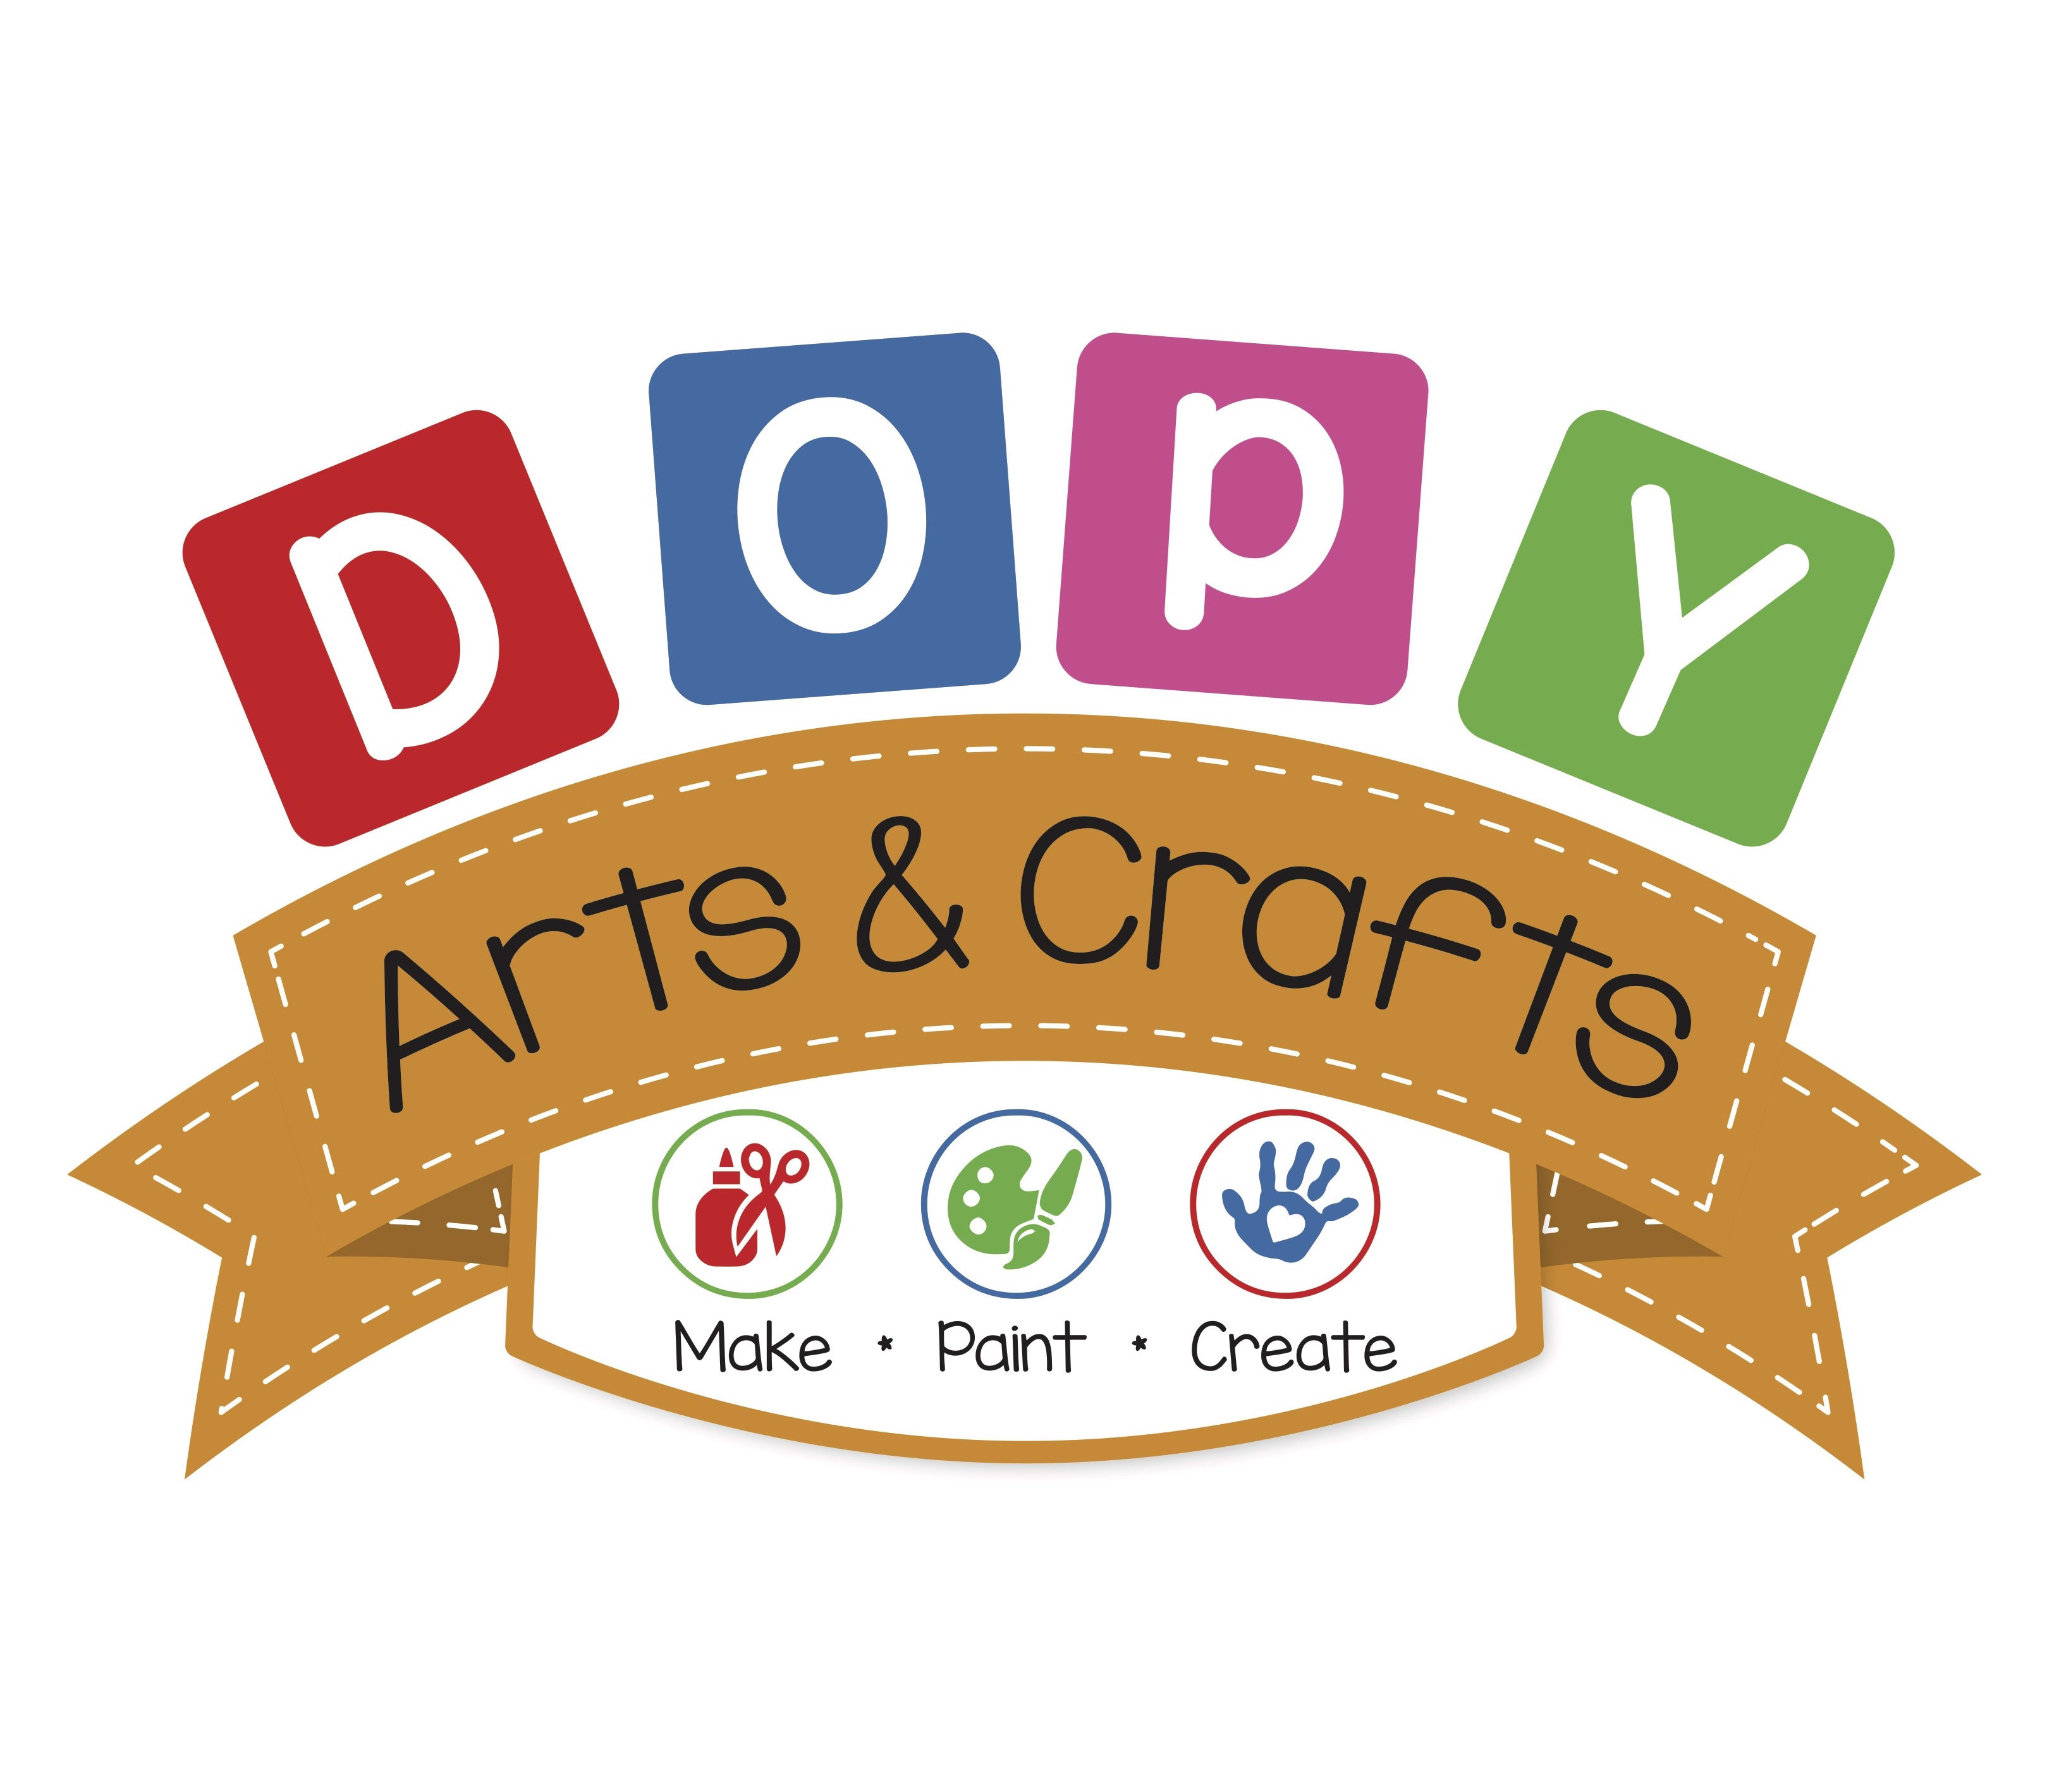 Dopy Arts & Crafts